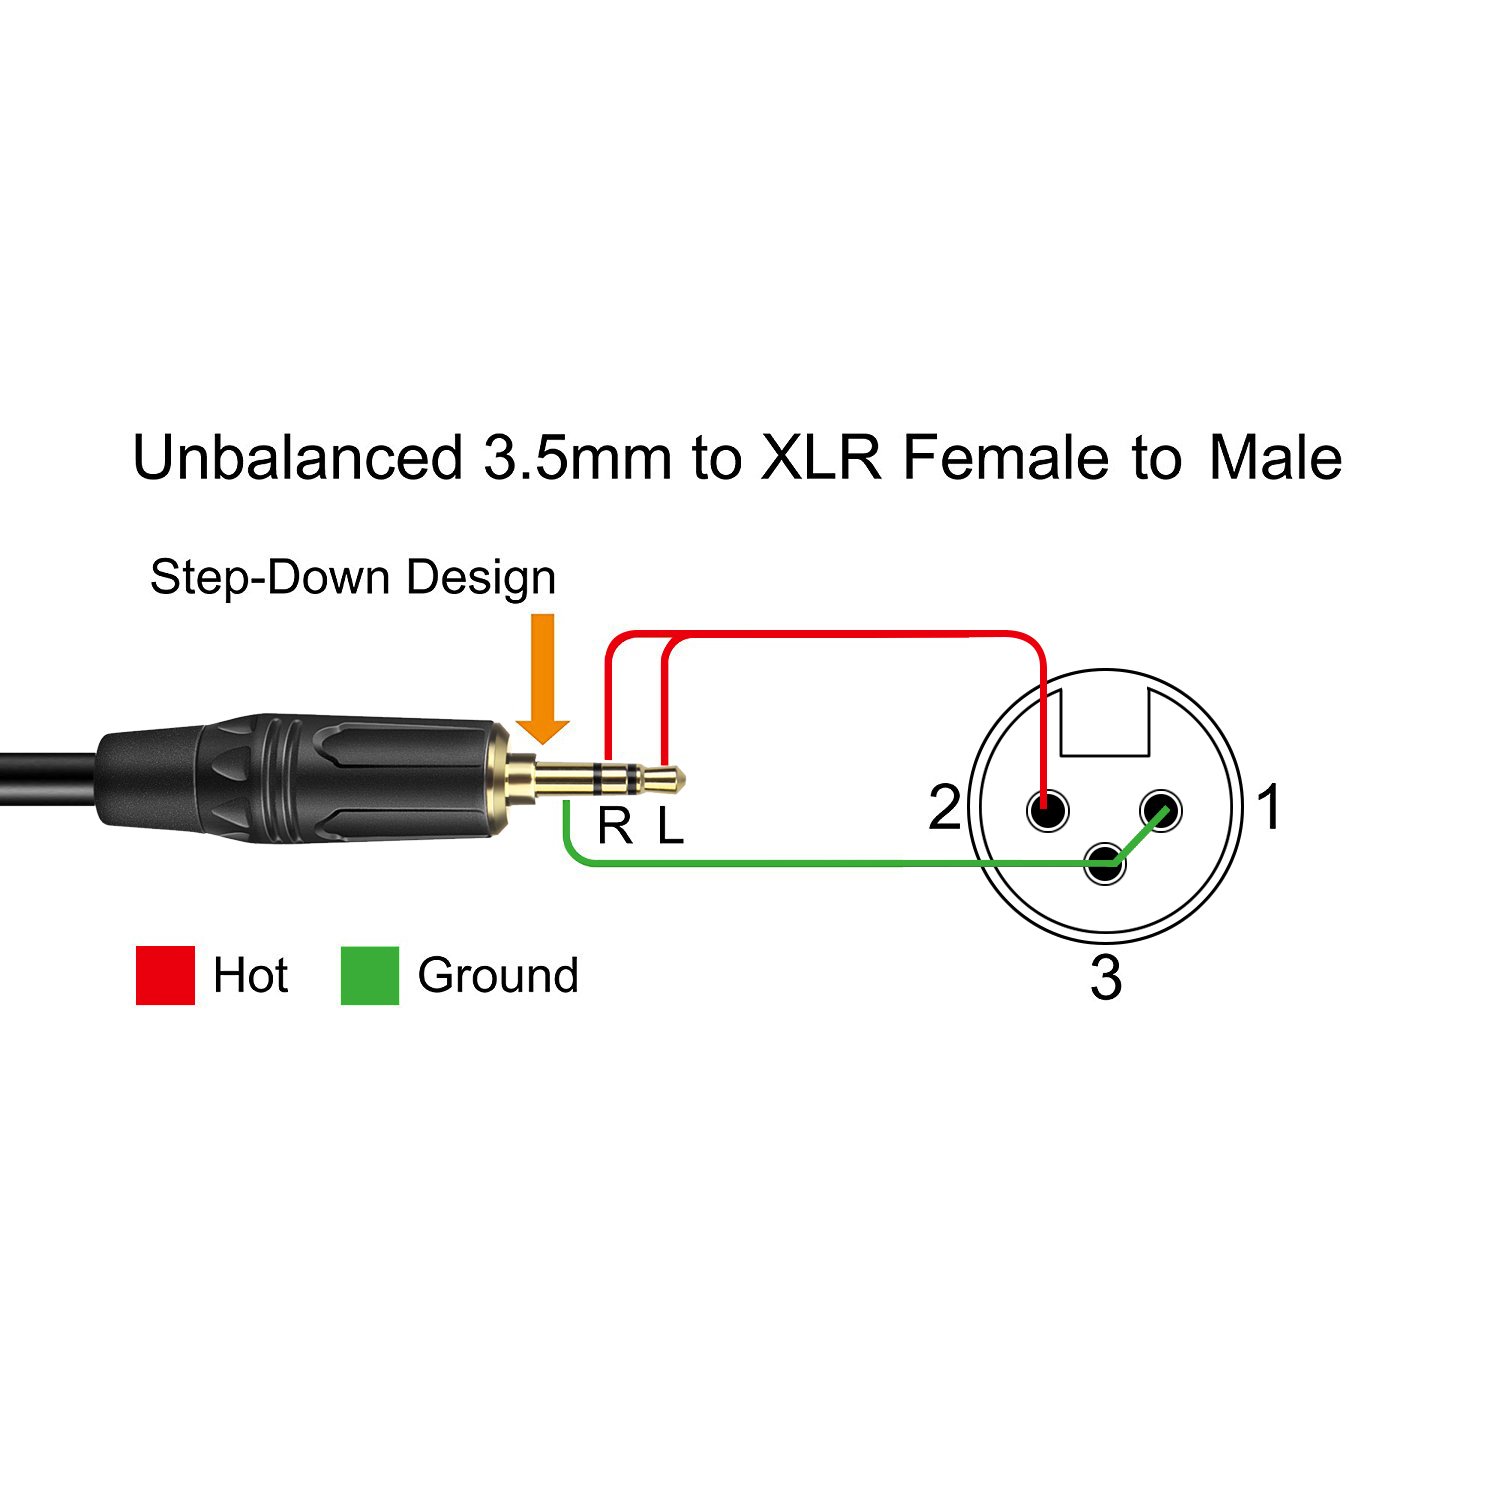 XLRF Output to 3.5mm Jack - Ground Pin 3? | diyAudio